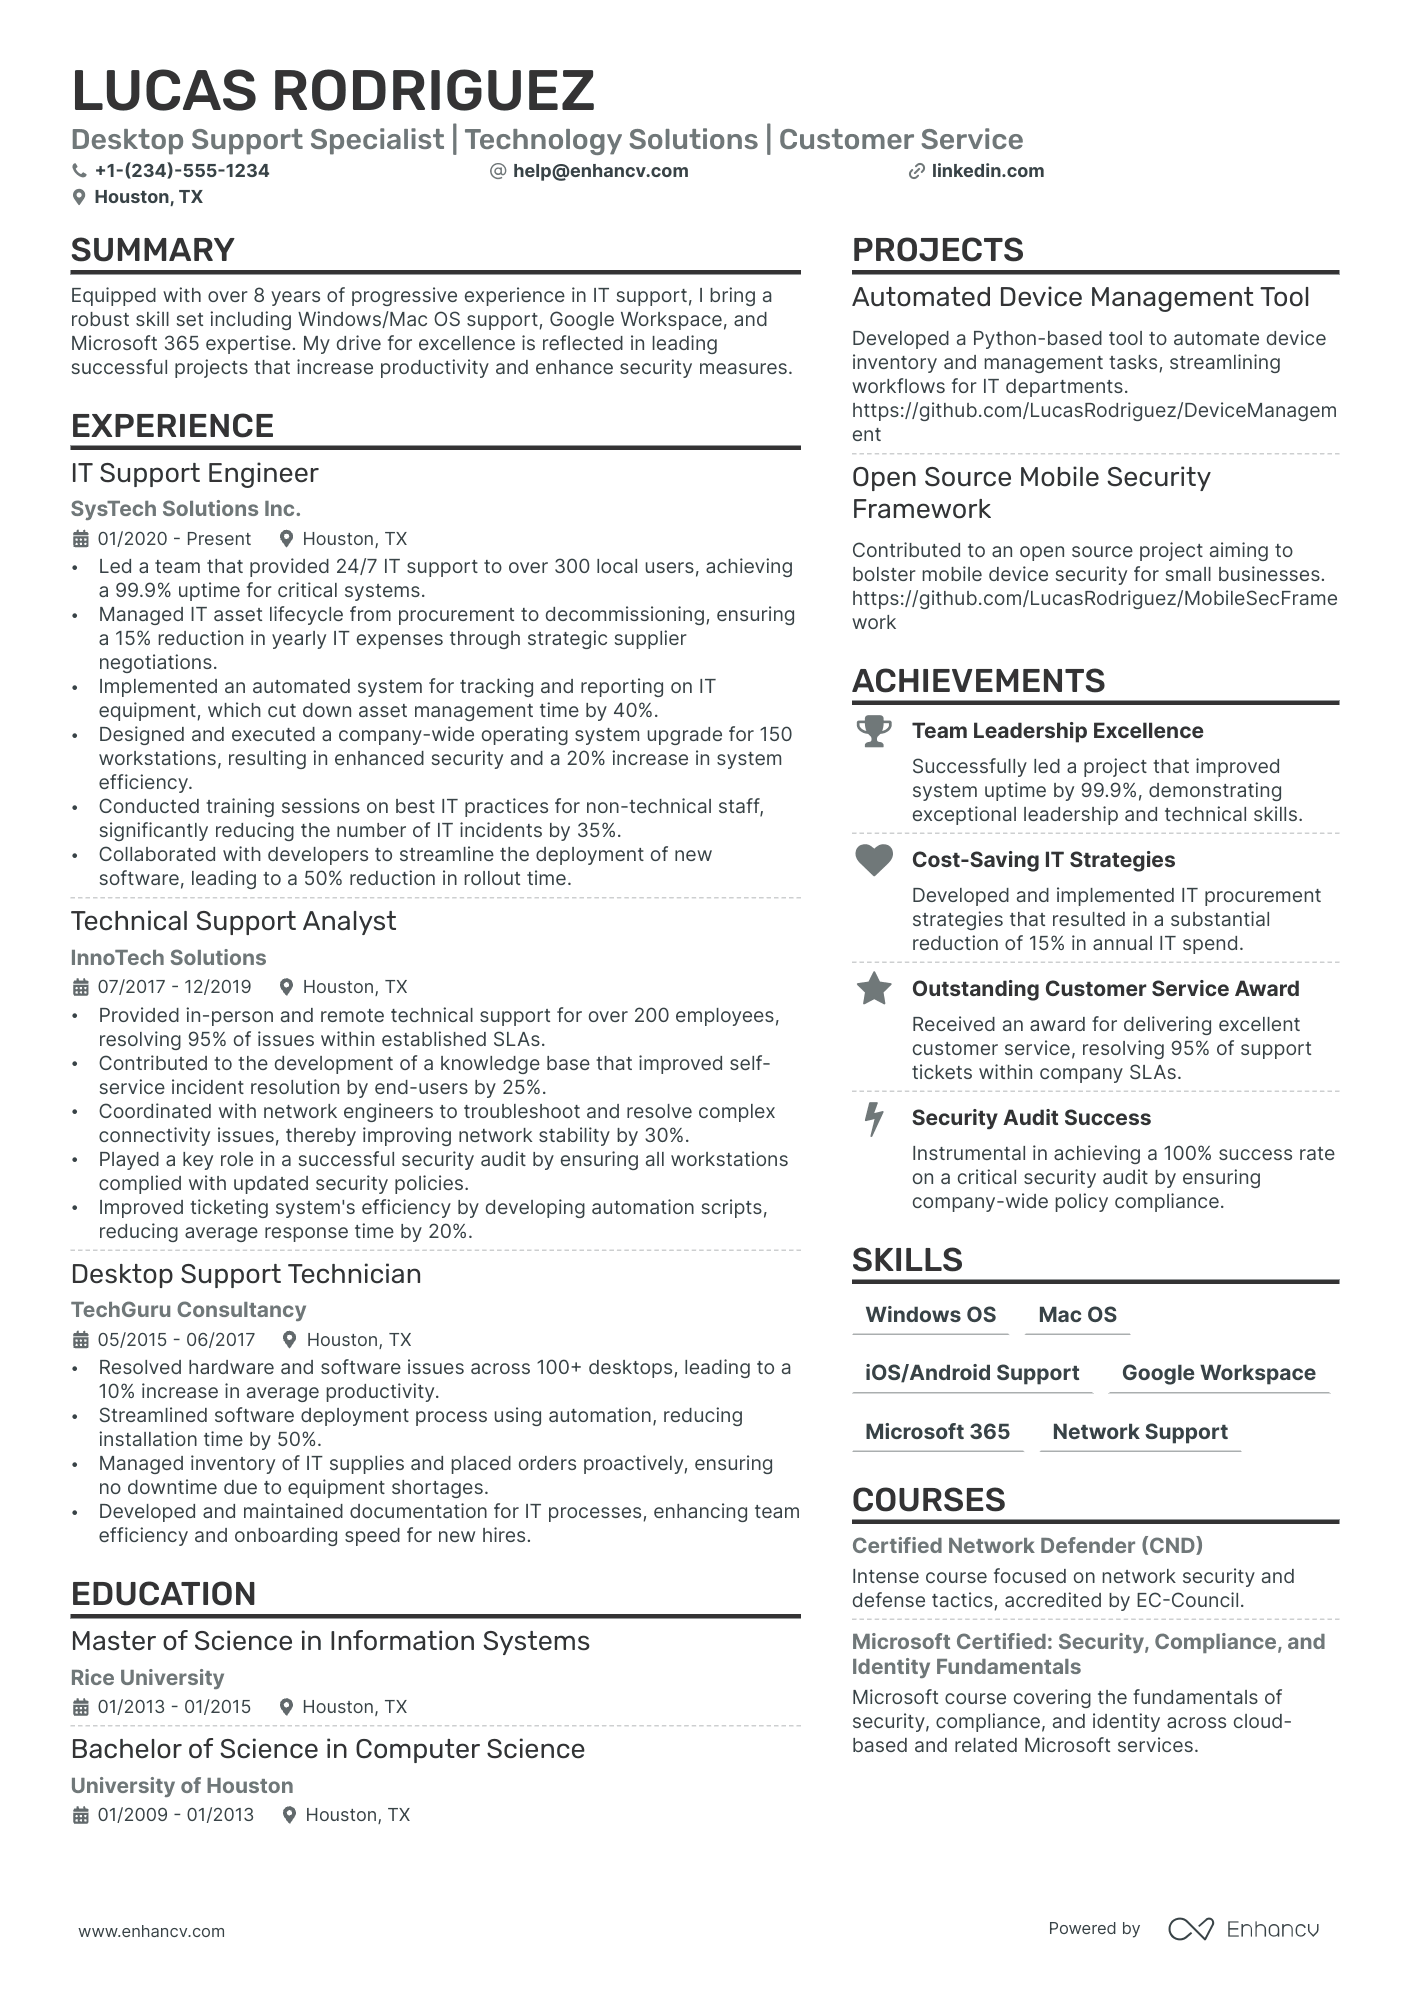 help desk profile for resume